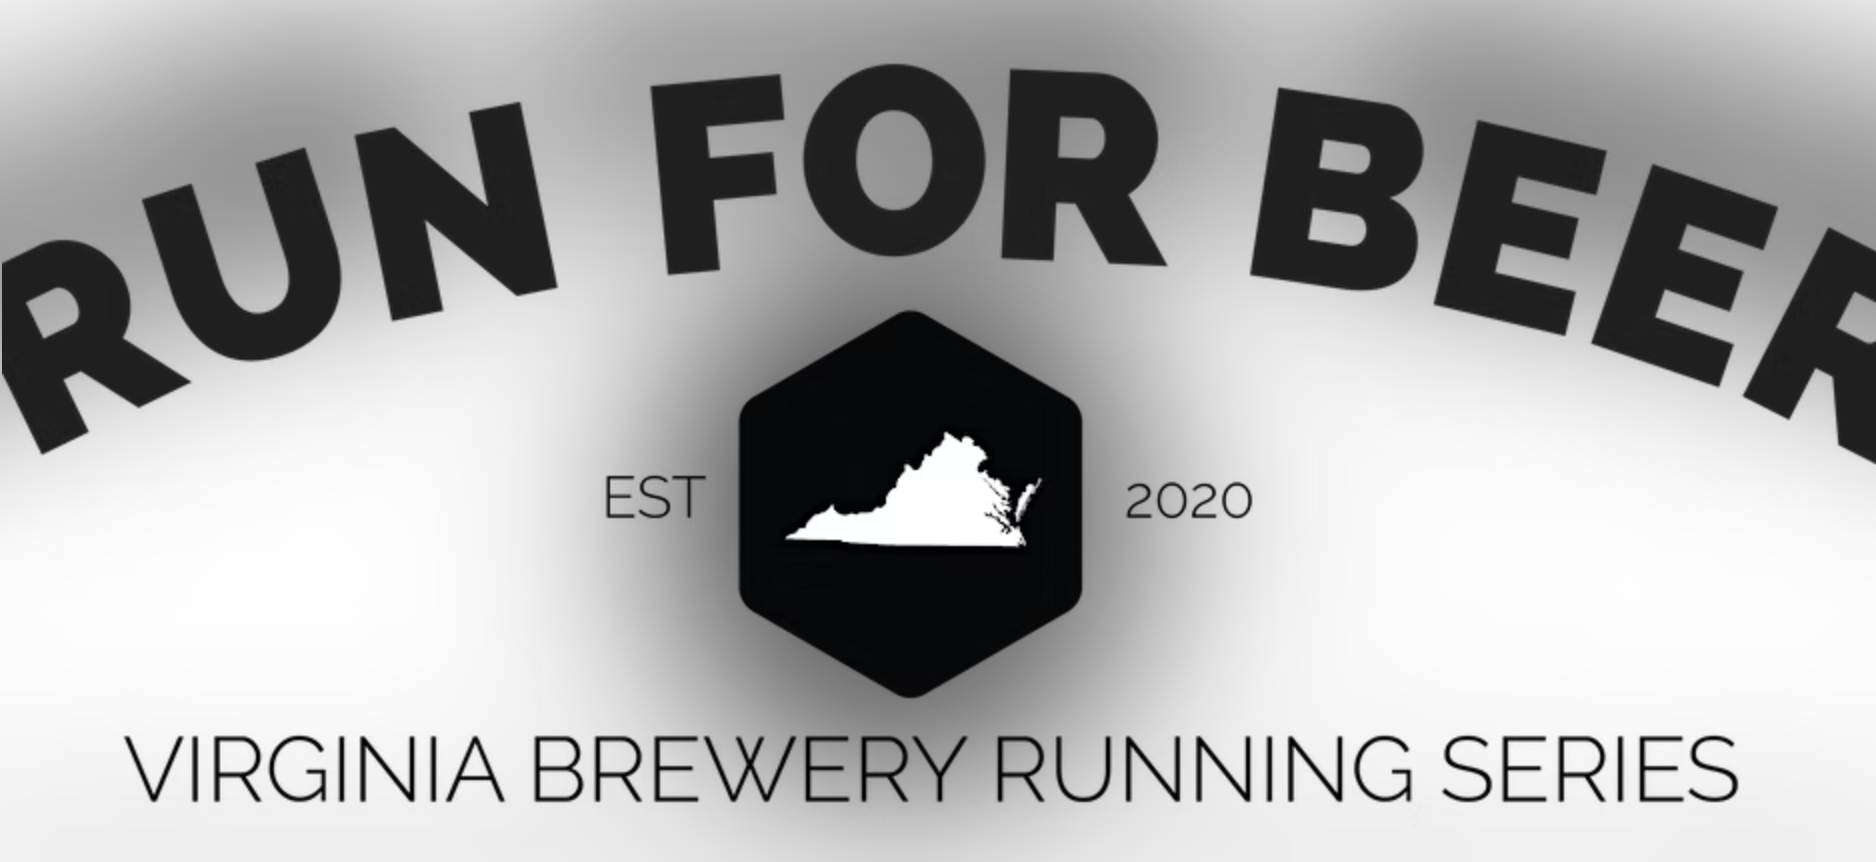 .5k Beer Run NYE Event -Rocket Frog Brewery|2022 VA Brewery Running Series